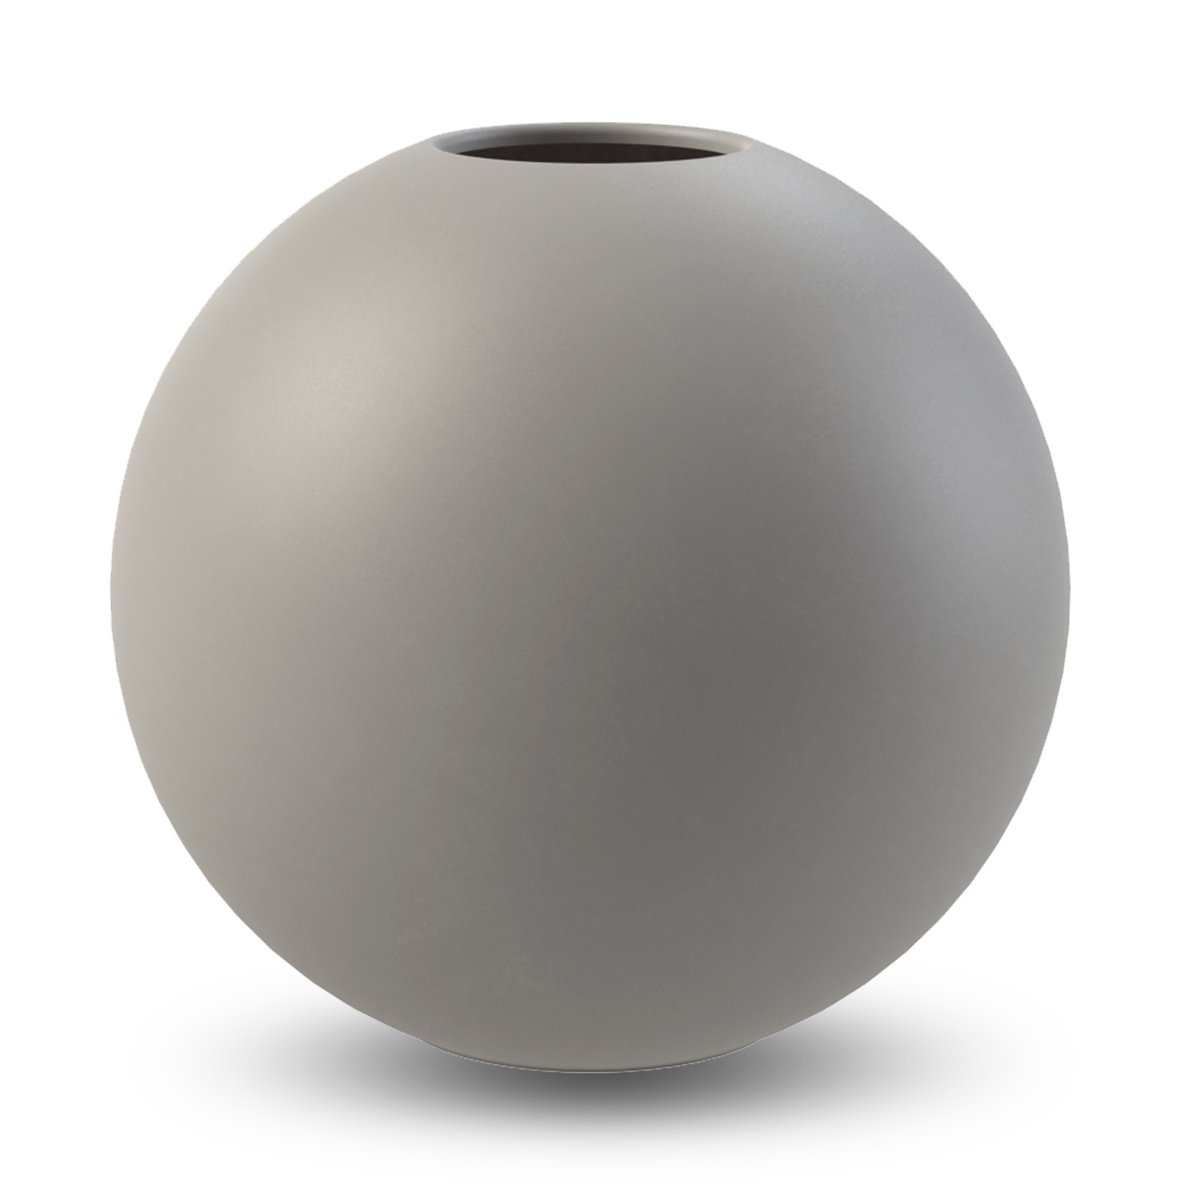 Cooee Design Ball vaas grey 30 cm.